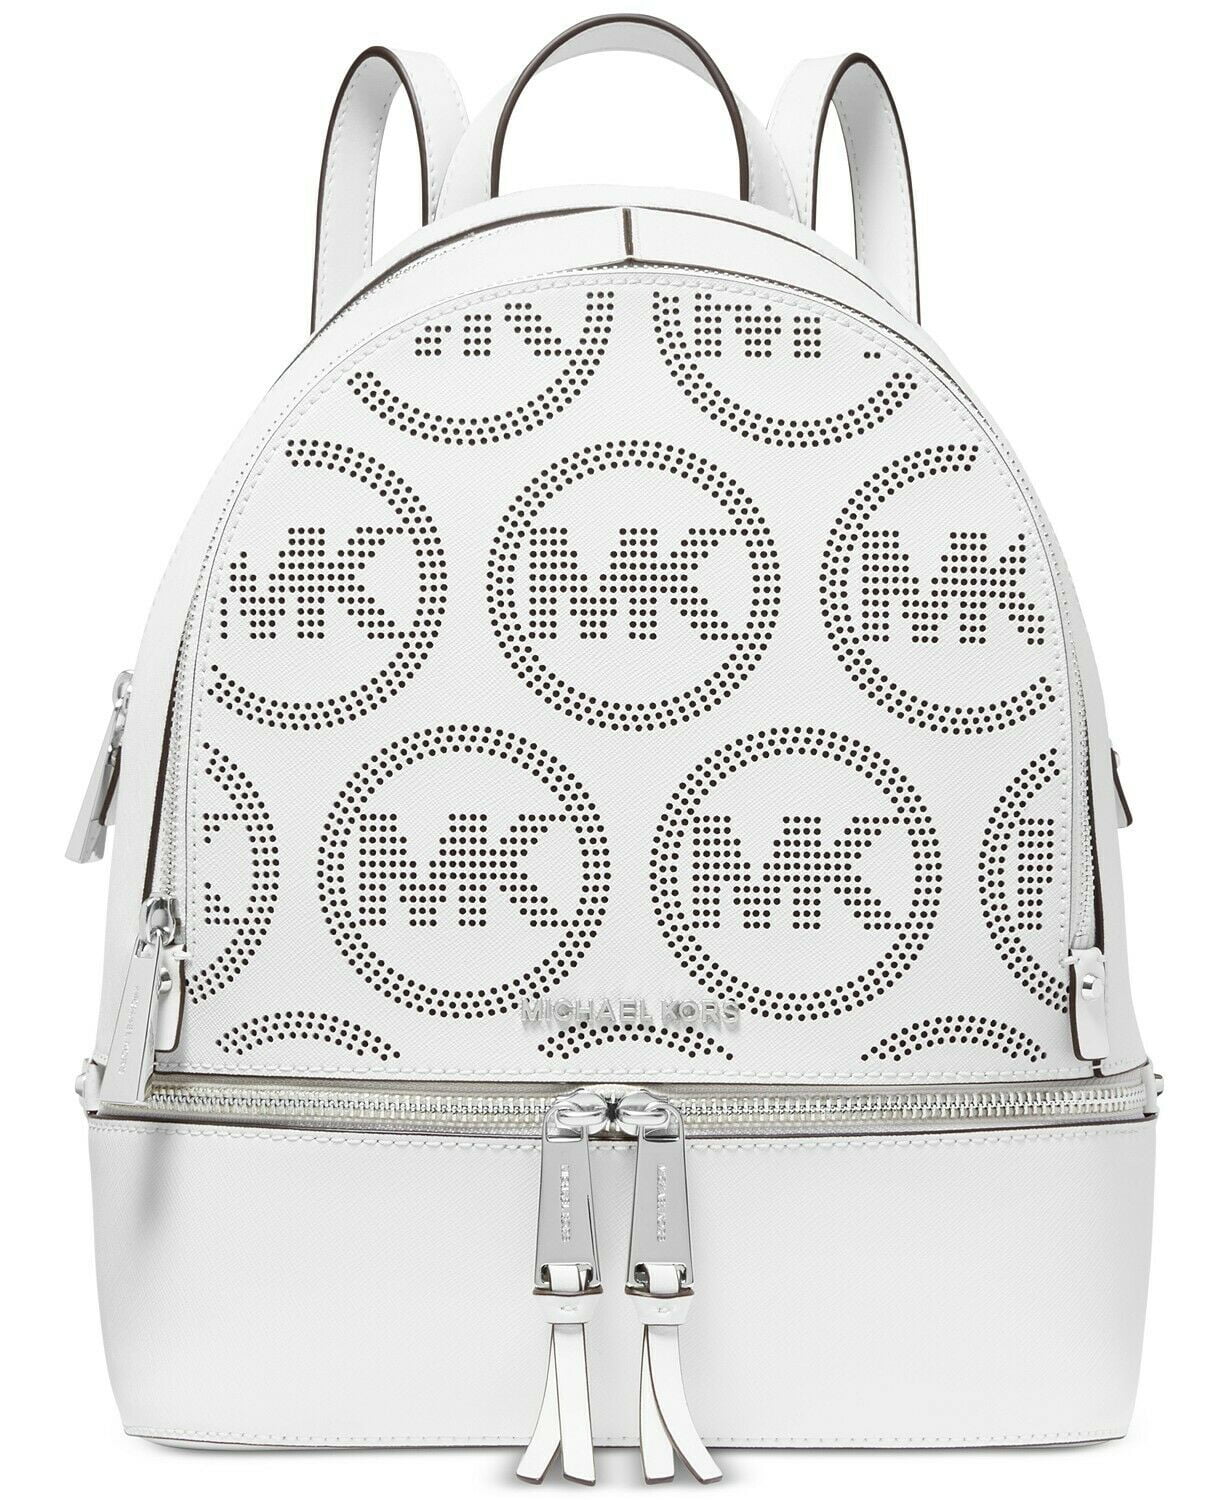 Michael Kors - Rhea Zip Medium Leather Backpack - Optic White